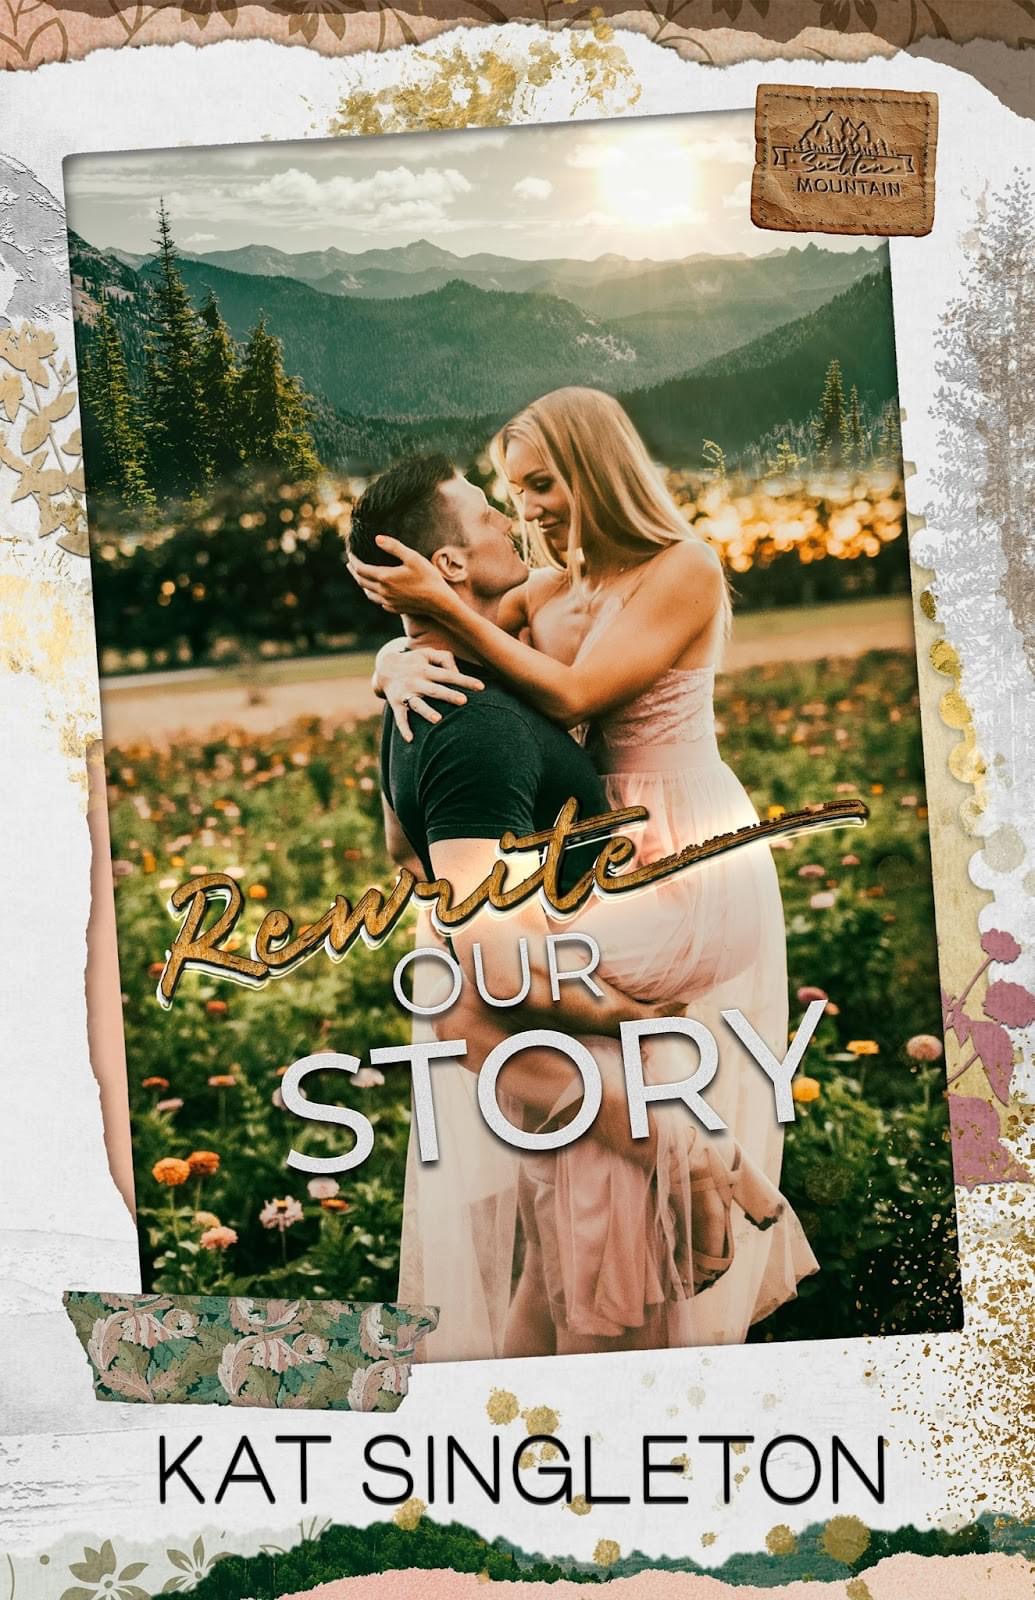 Rewrite Our Story - Kat Singleton